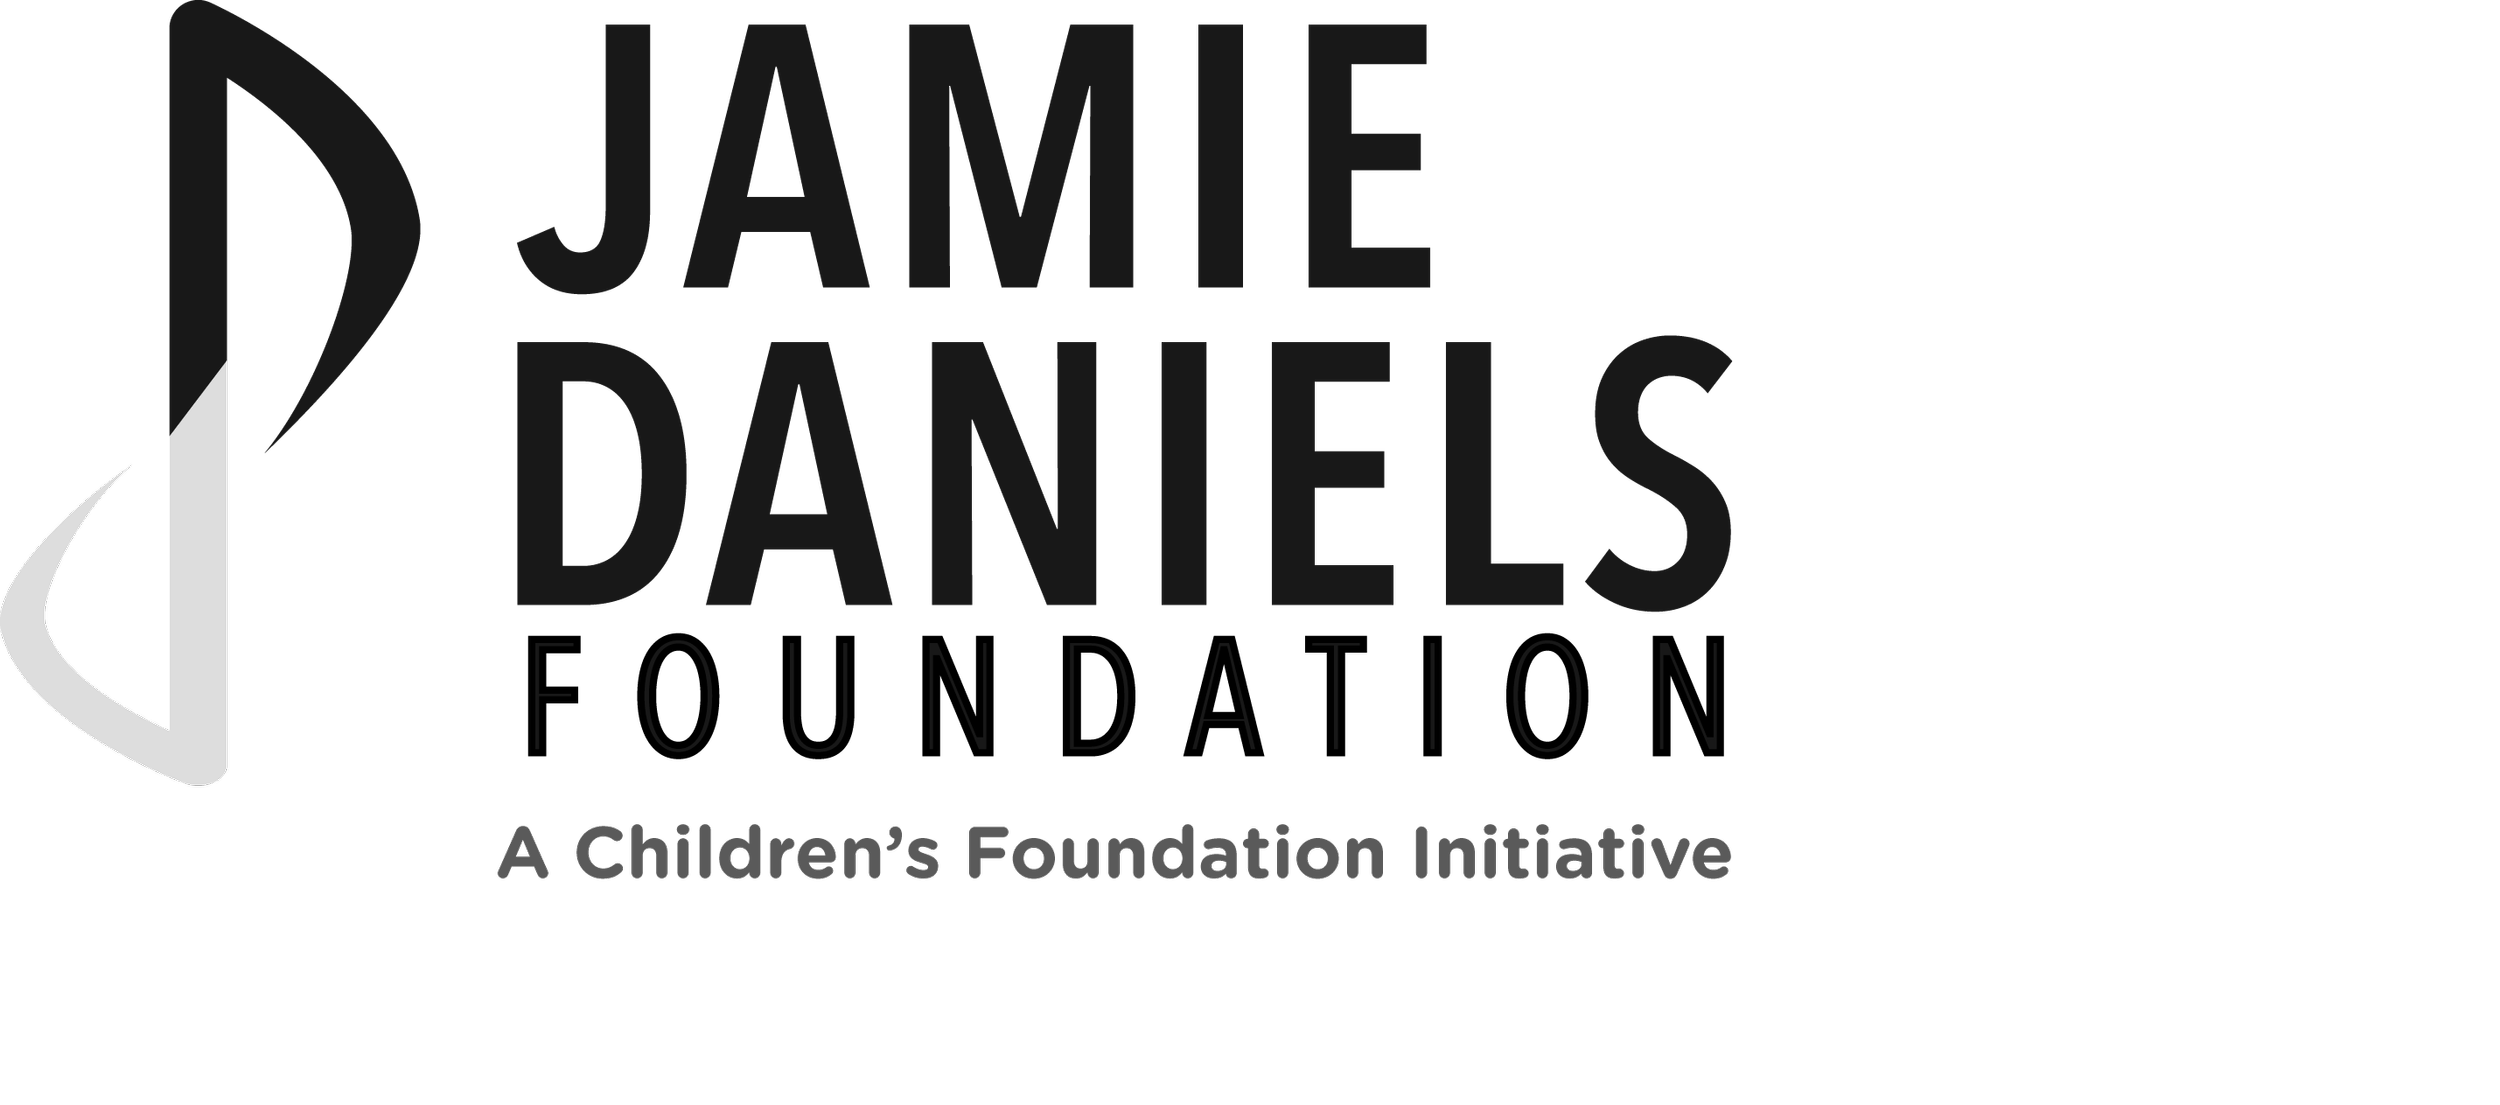 Jamie Daniles Foundation Logo 2.png